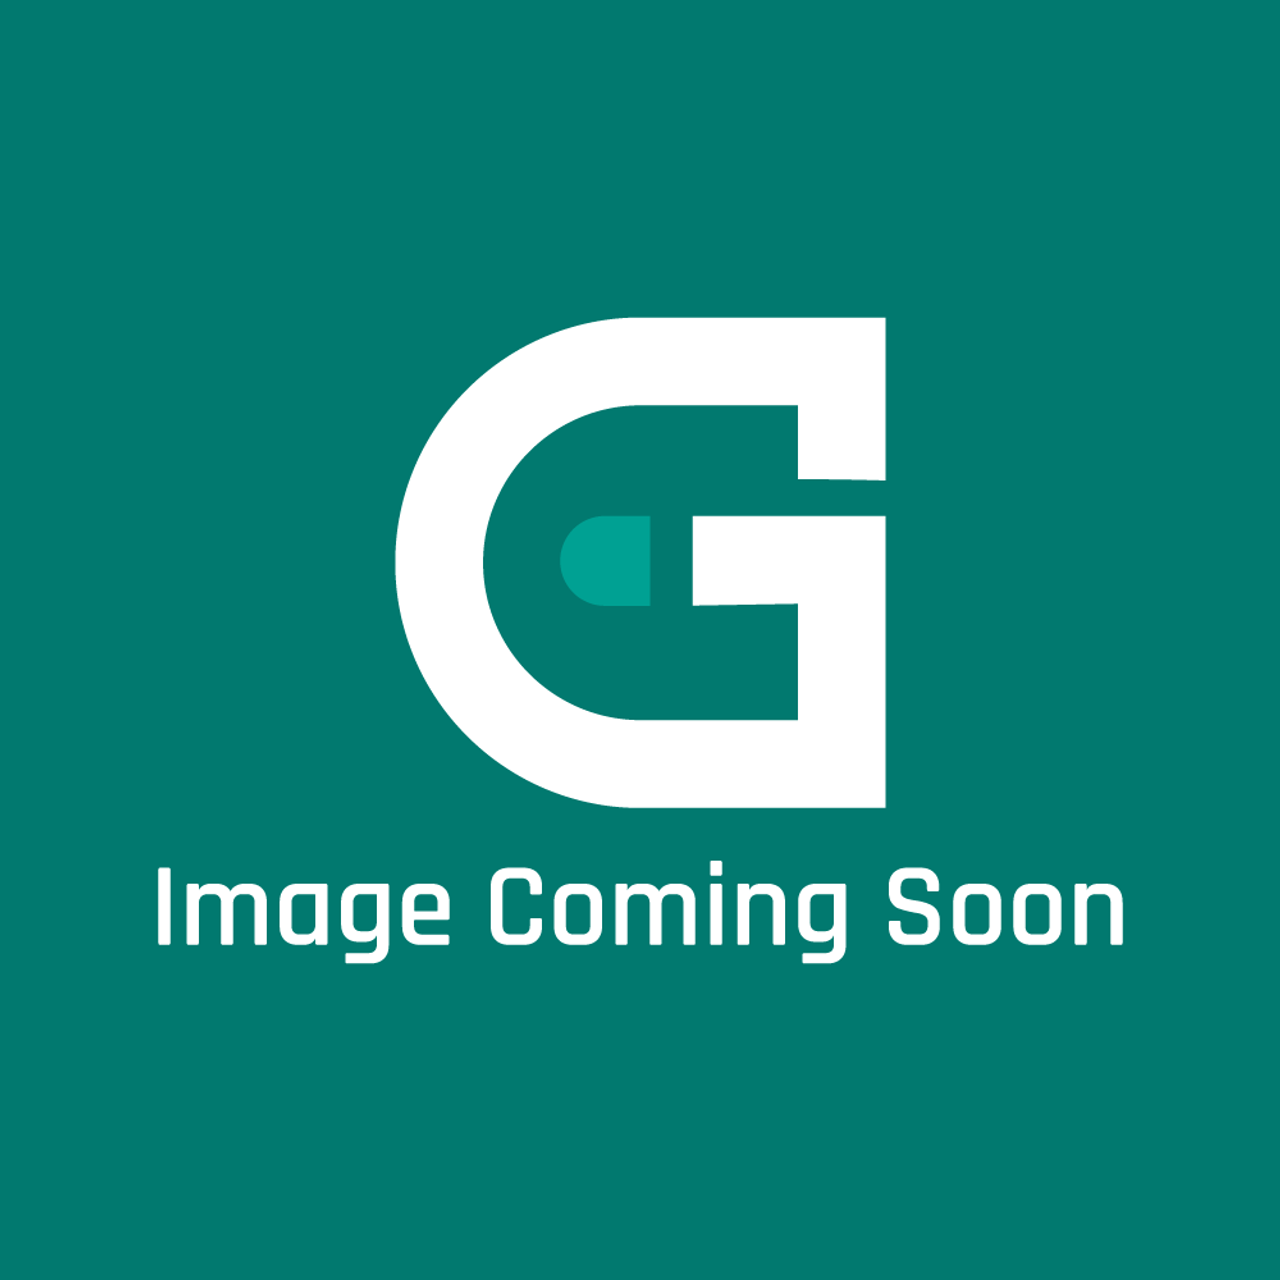 AGA Marvel RG4M310055 - Byp Valve 0.51 Sm474-0700-Va15 - Image Coming Soon!